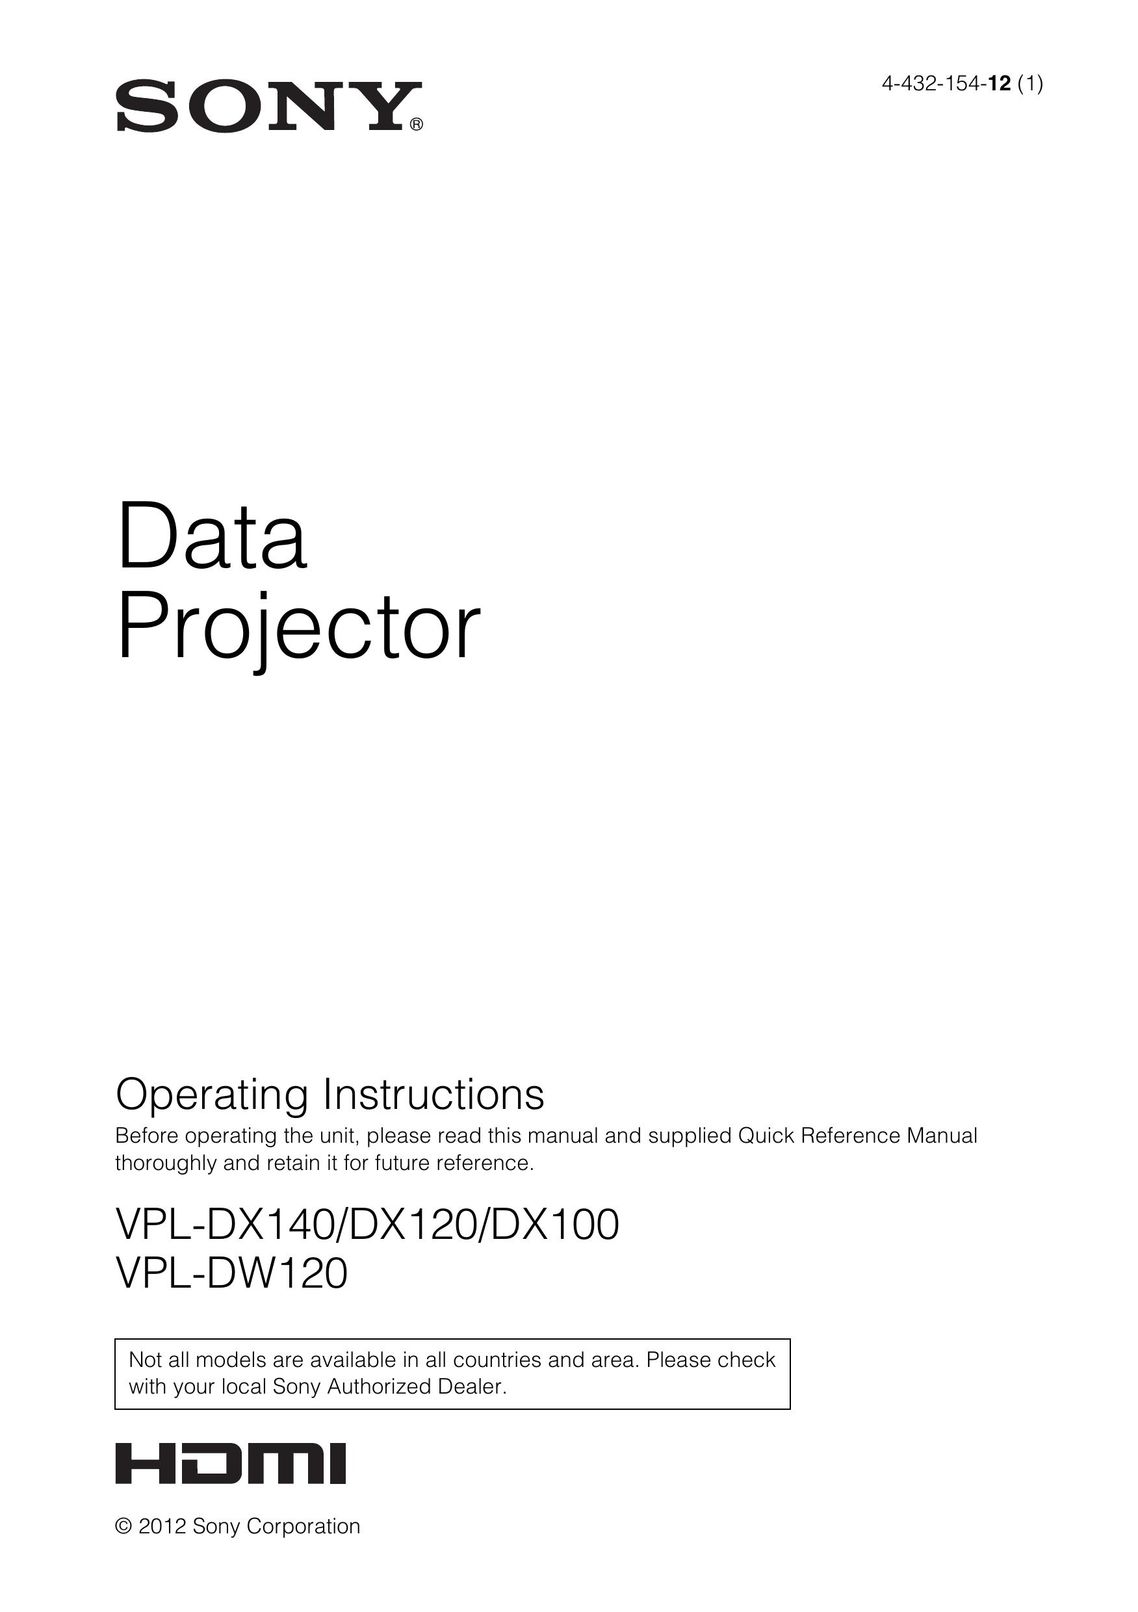 Sony VPL-DW120 Projector Accessories User Manual